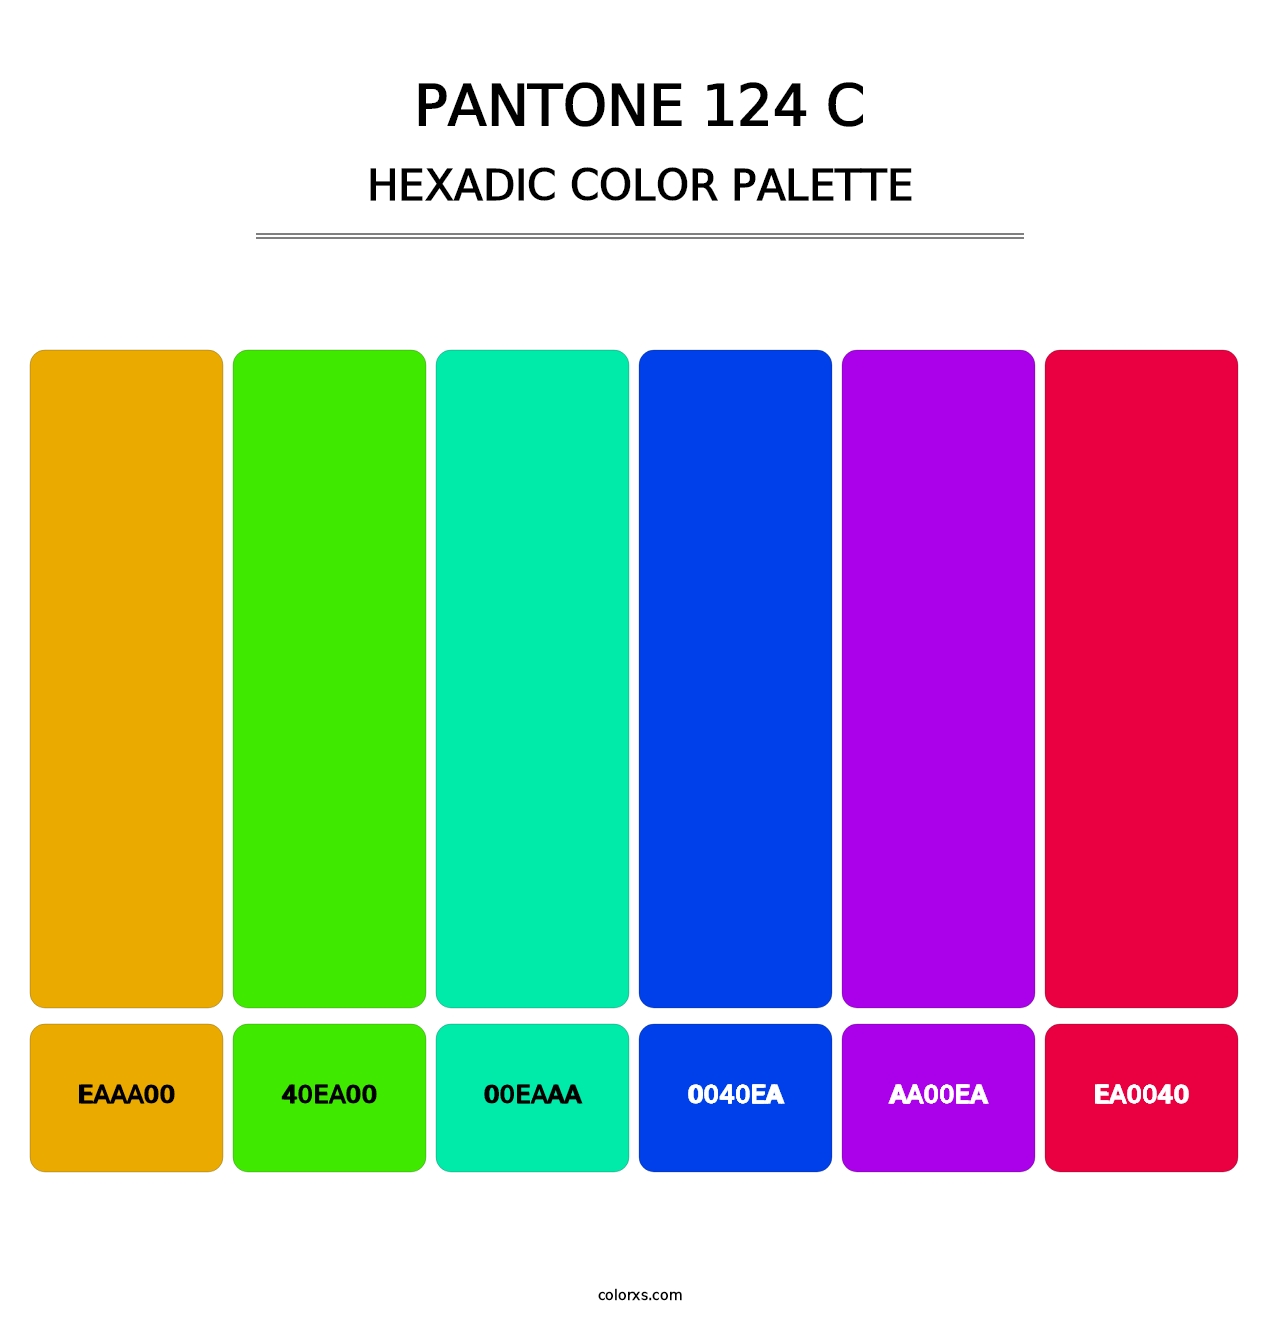 PANTONE 124 C - Hexadic Color Palette